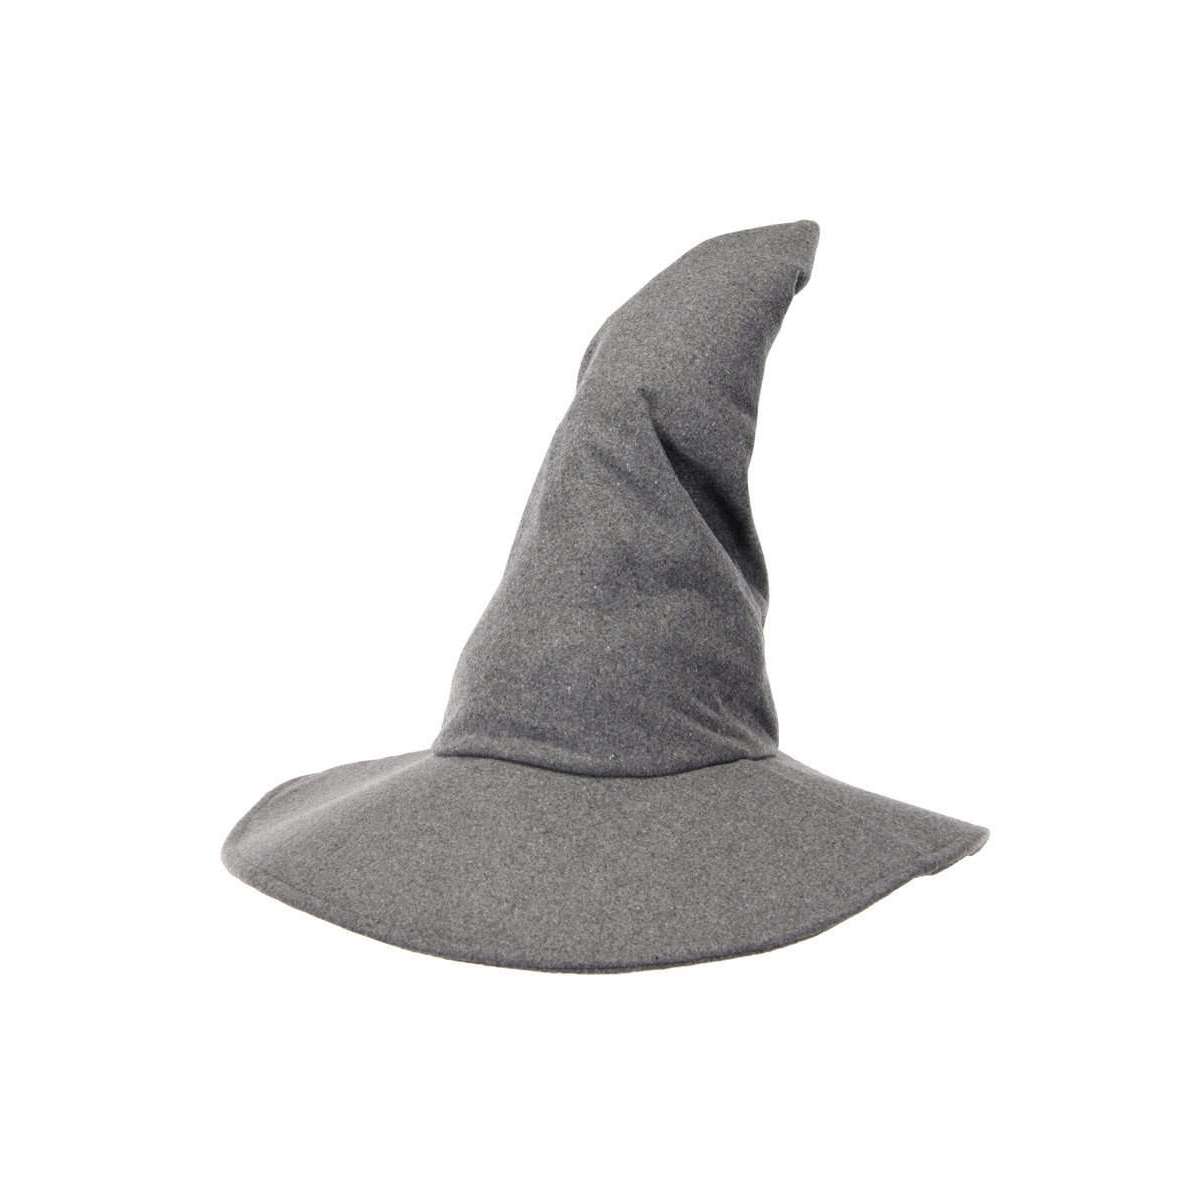 Gandalf Plush Hat